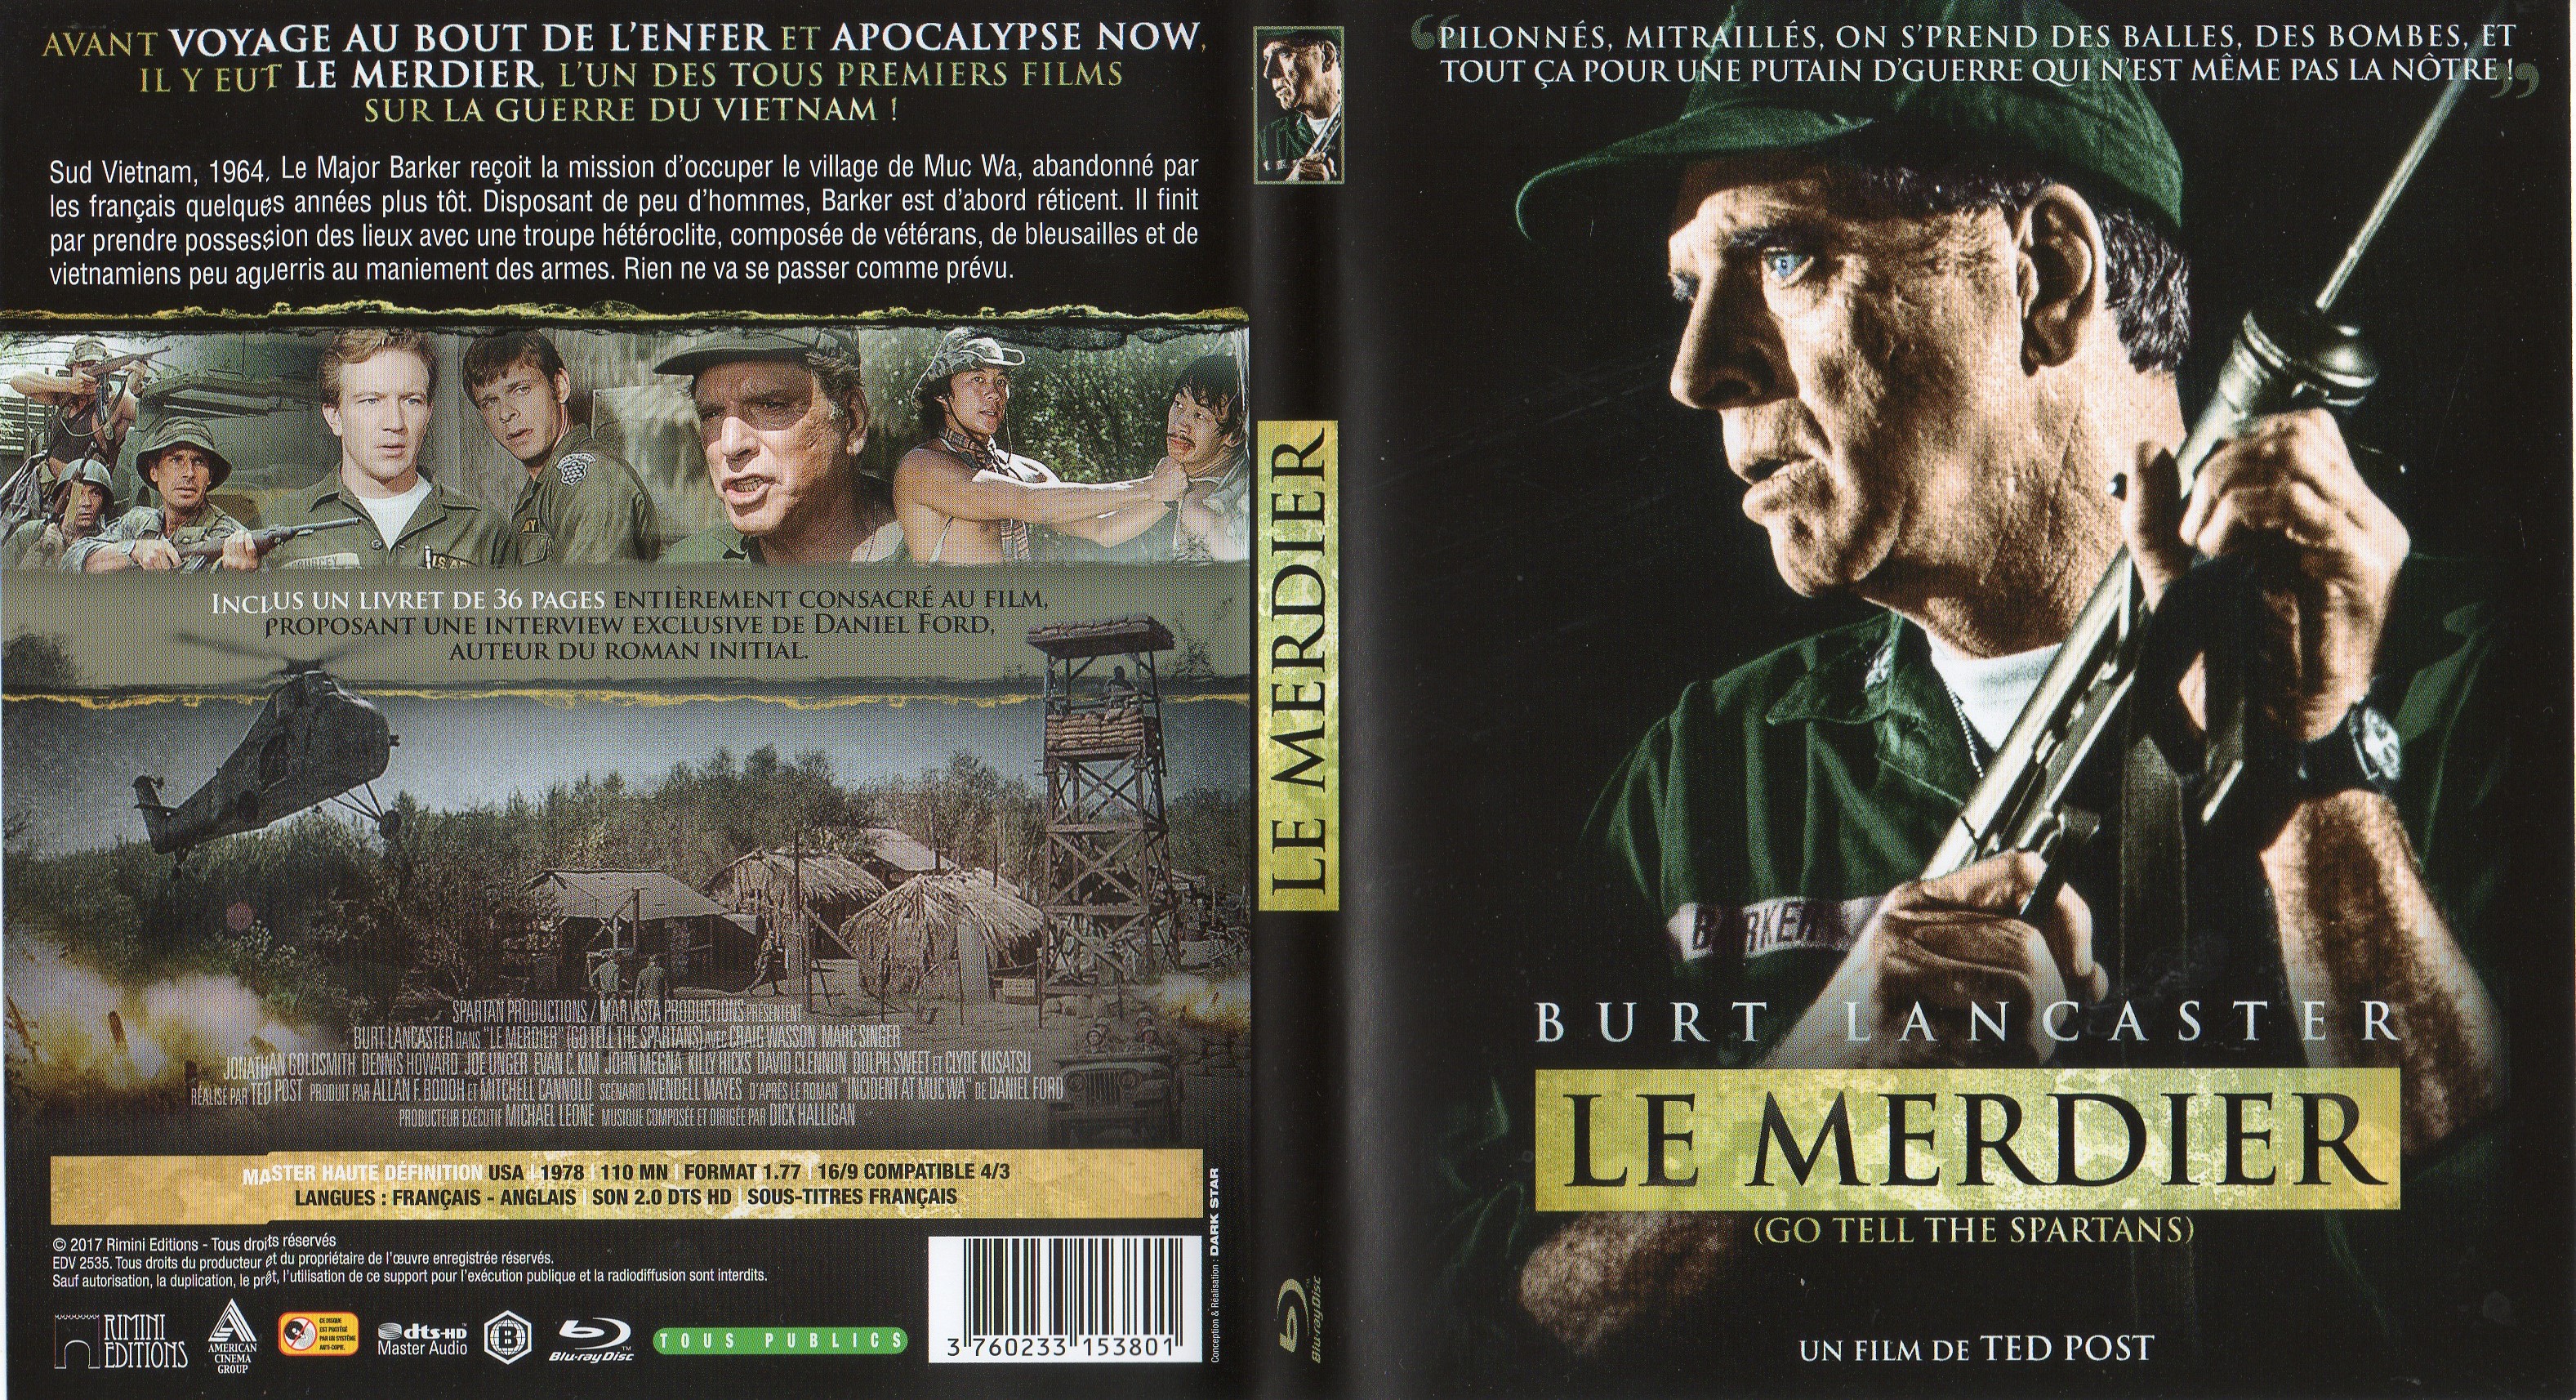 Jaquette DVD Le Merdier (BLU-RAY) v2